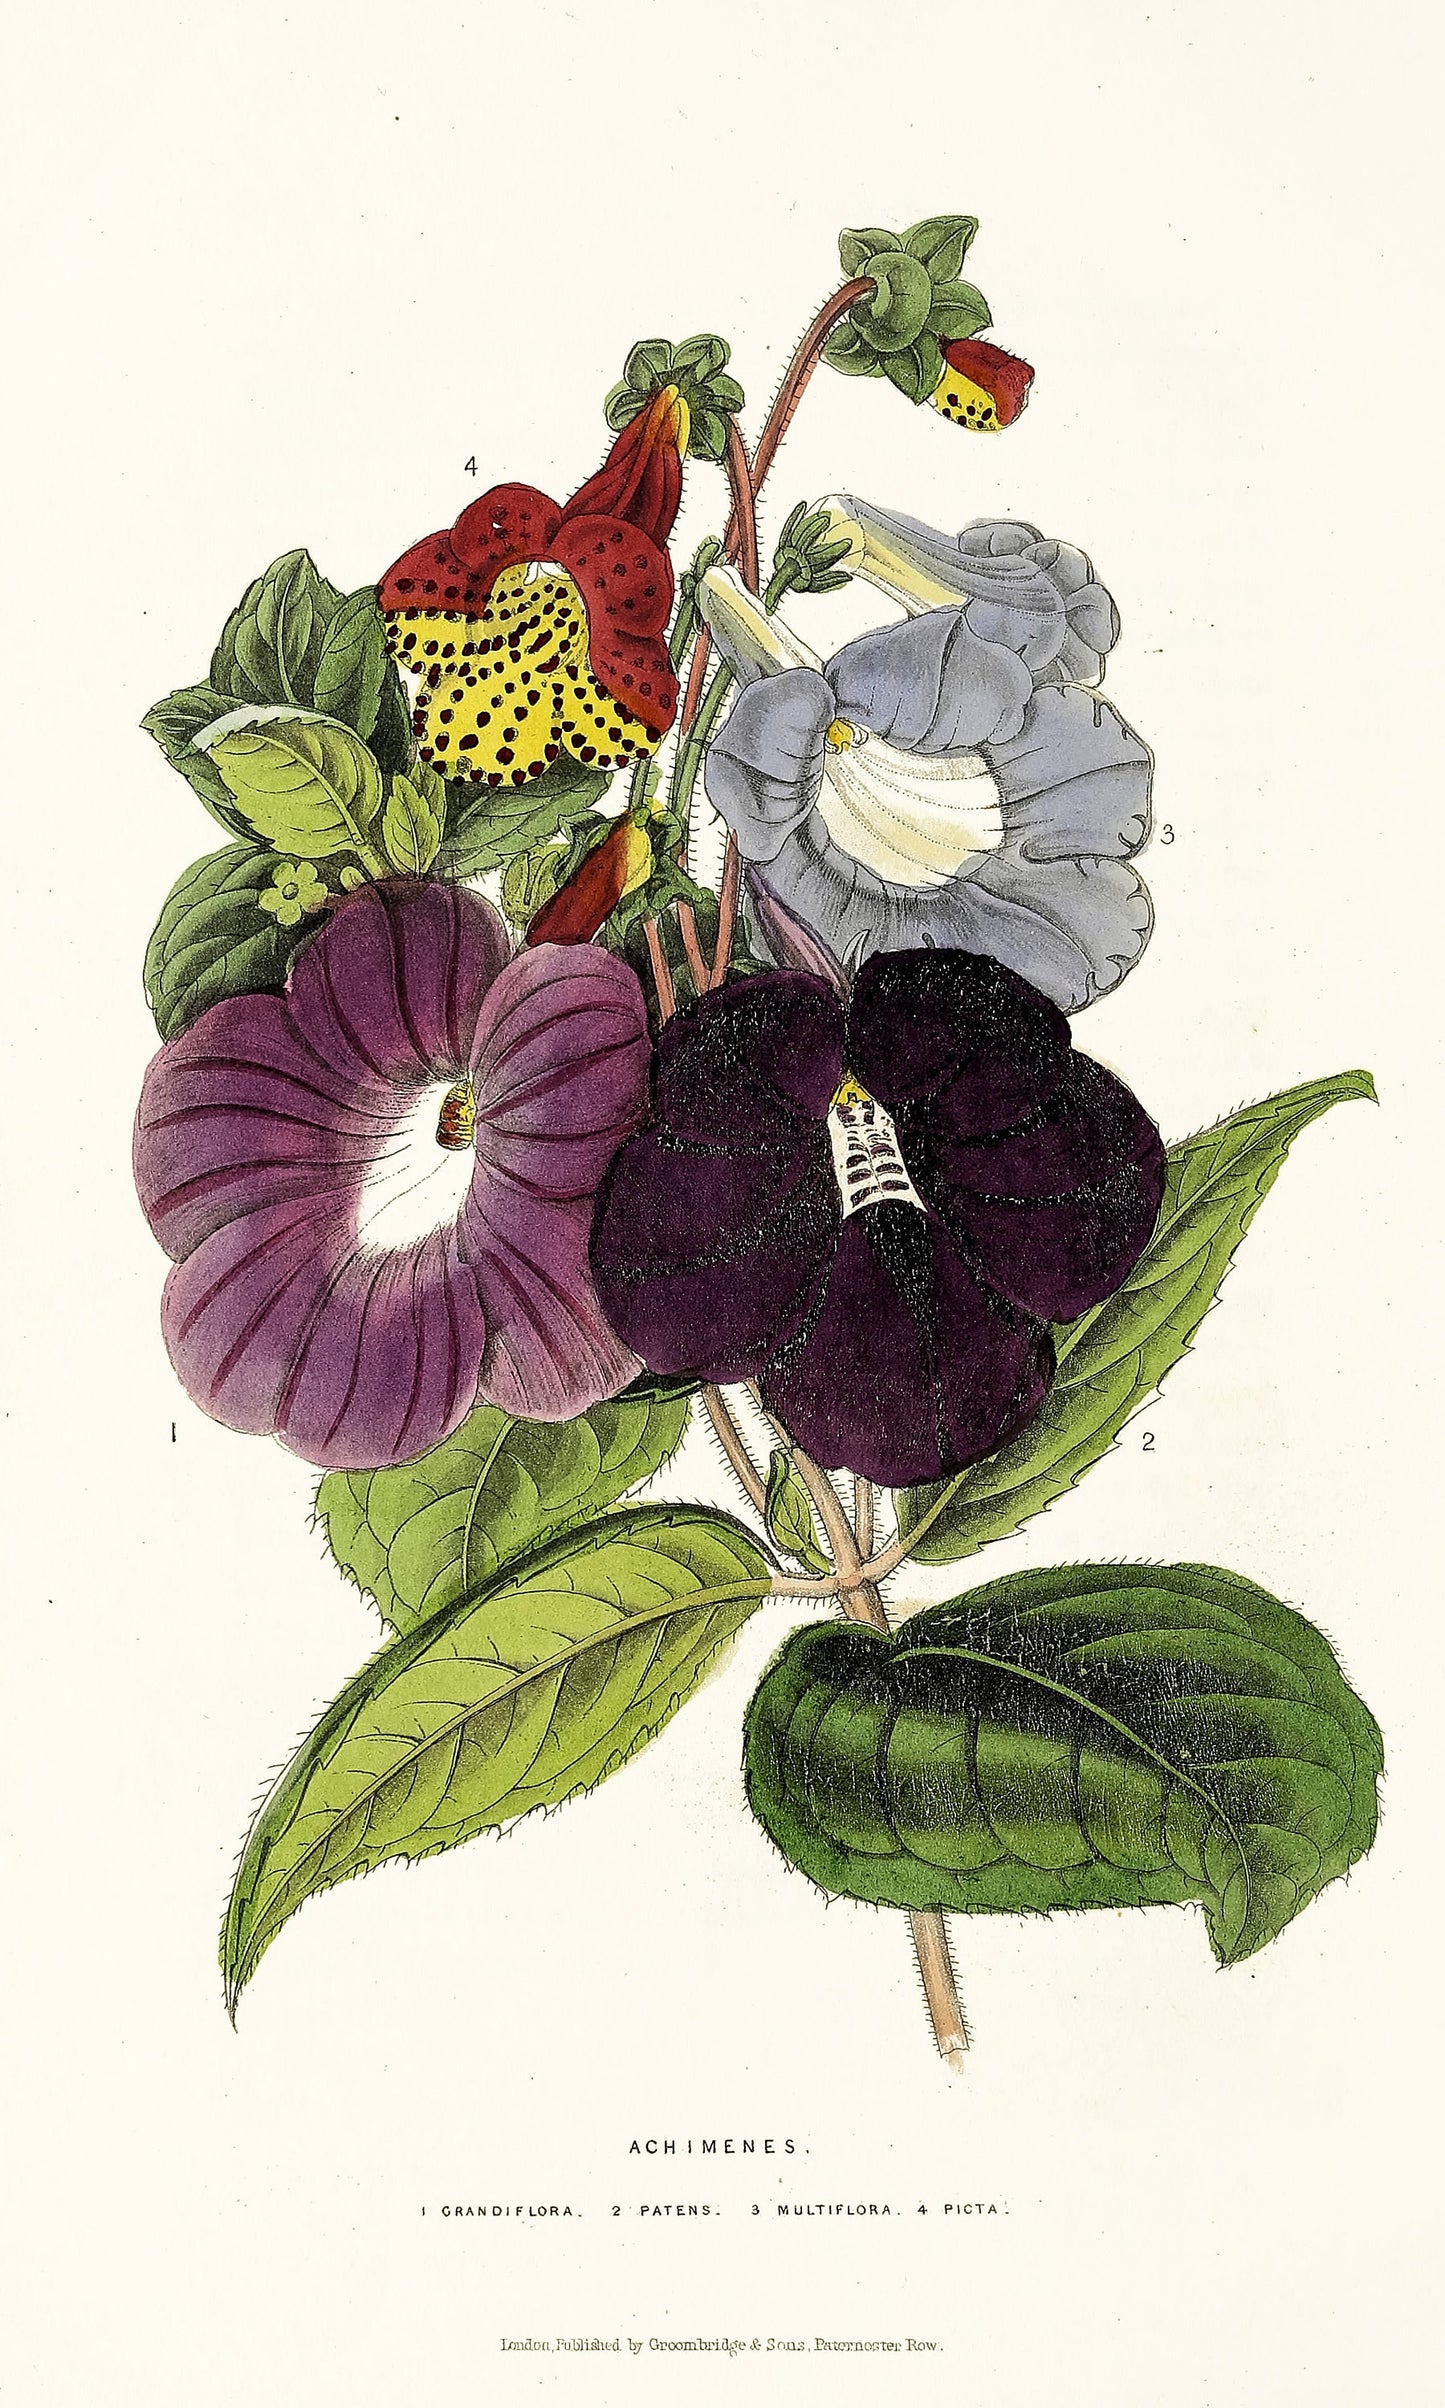 The Florist's Journal & Gardener's Record [37 Images]